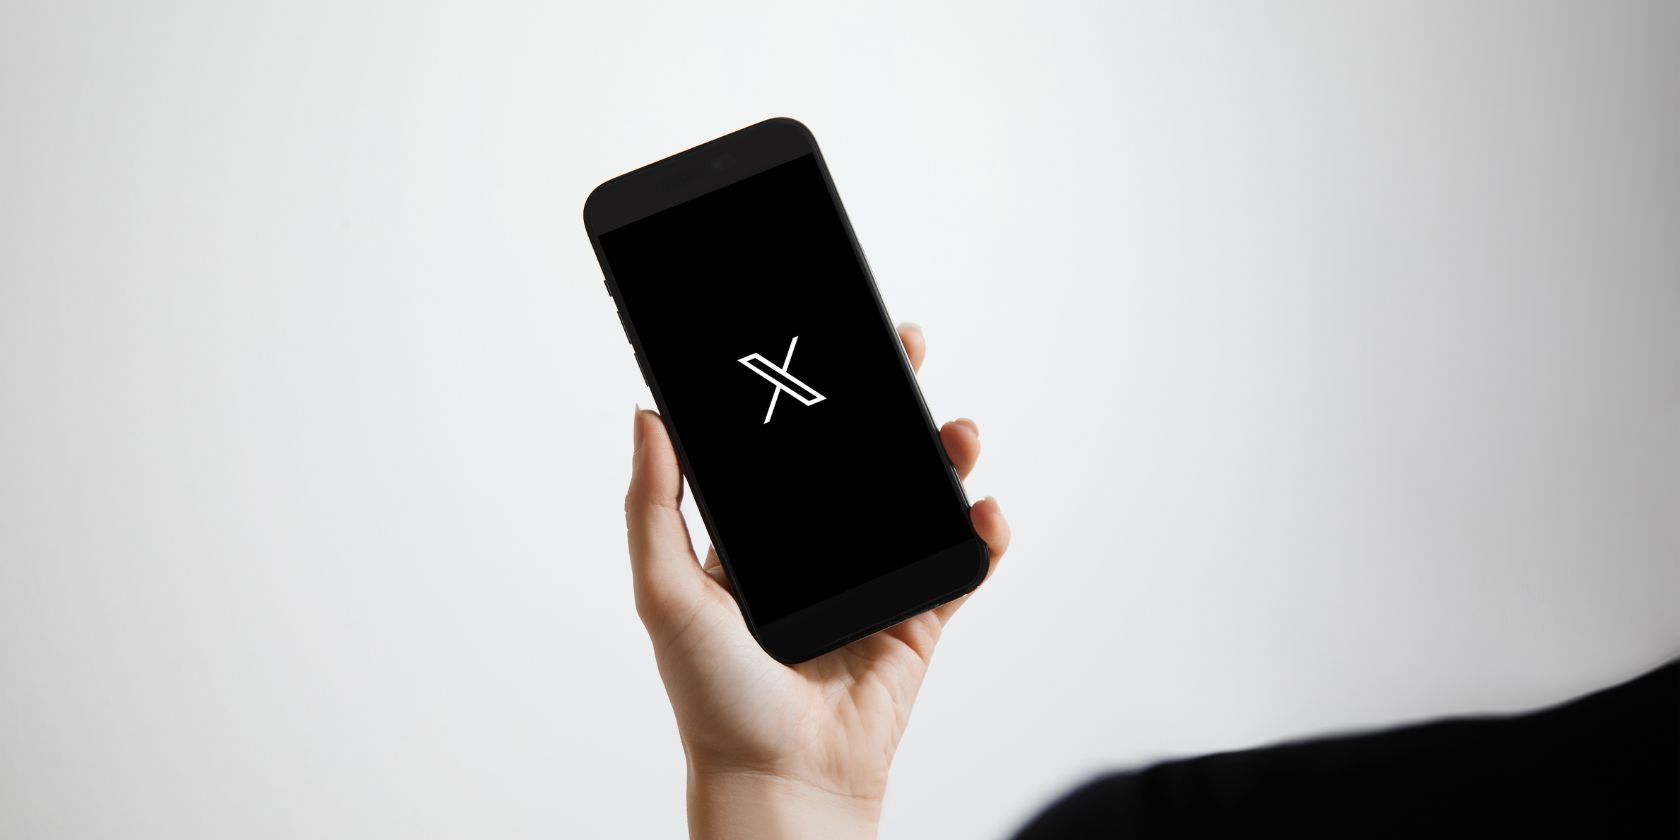 x twitter logo on smartphone